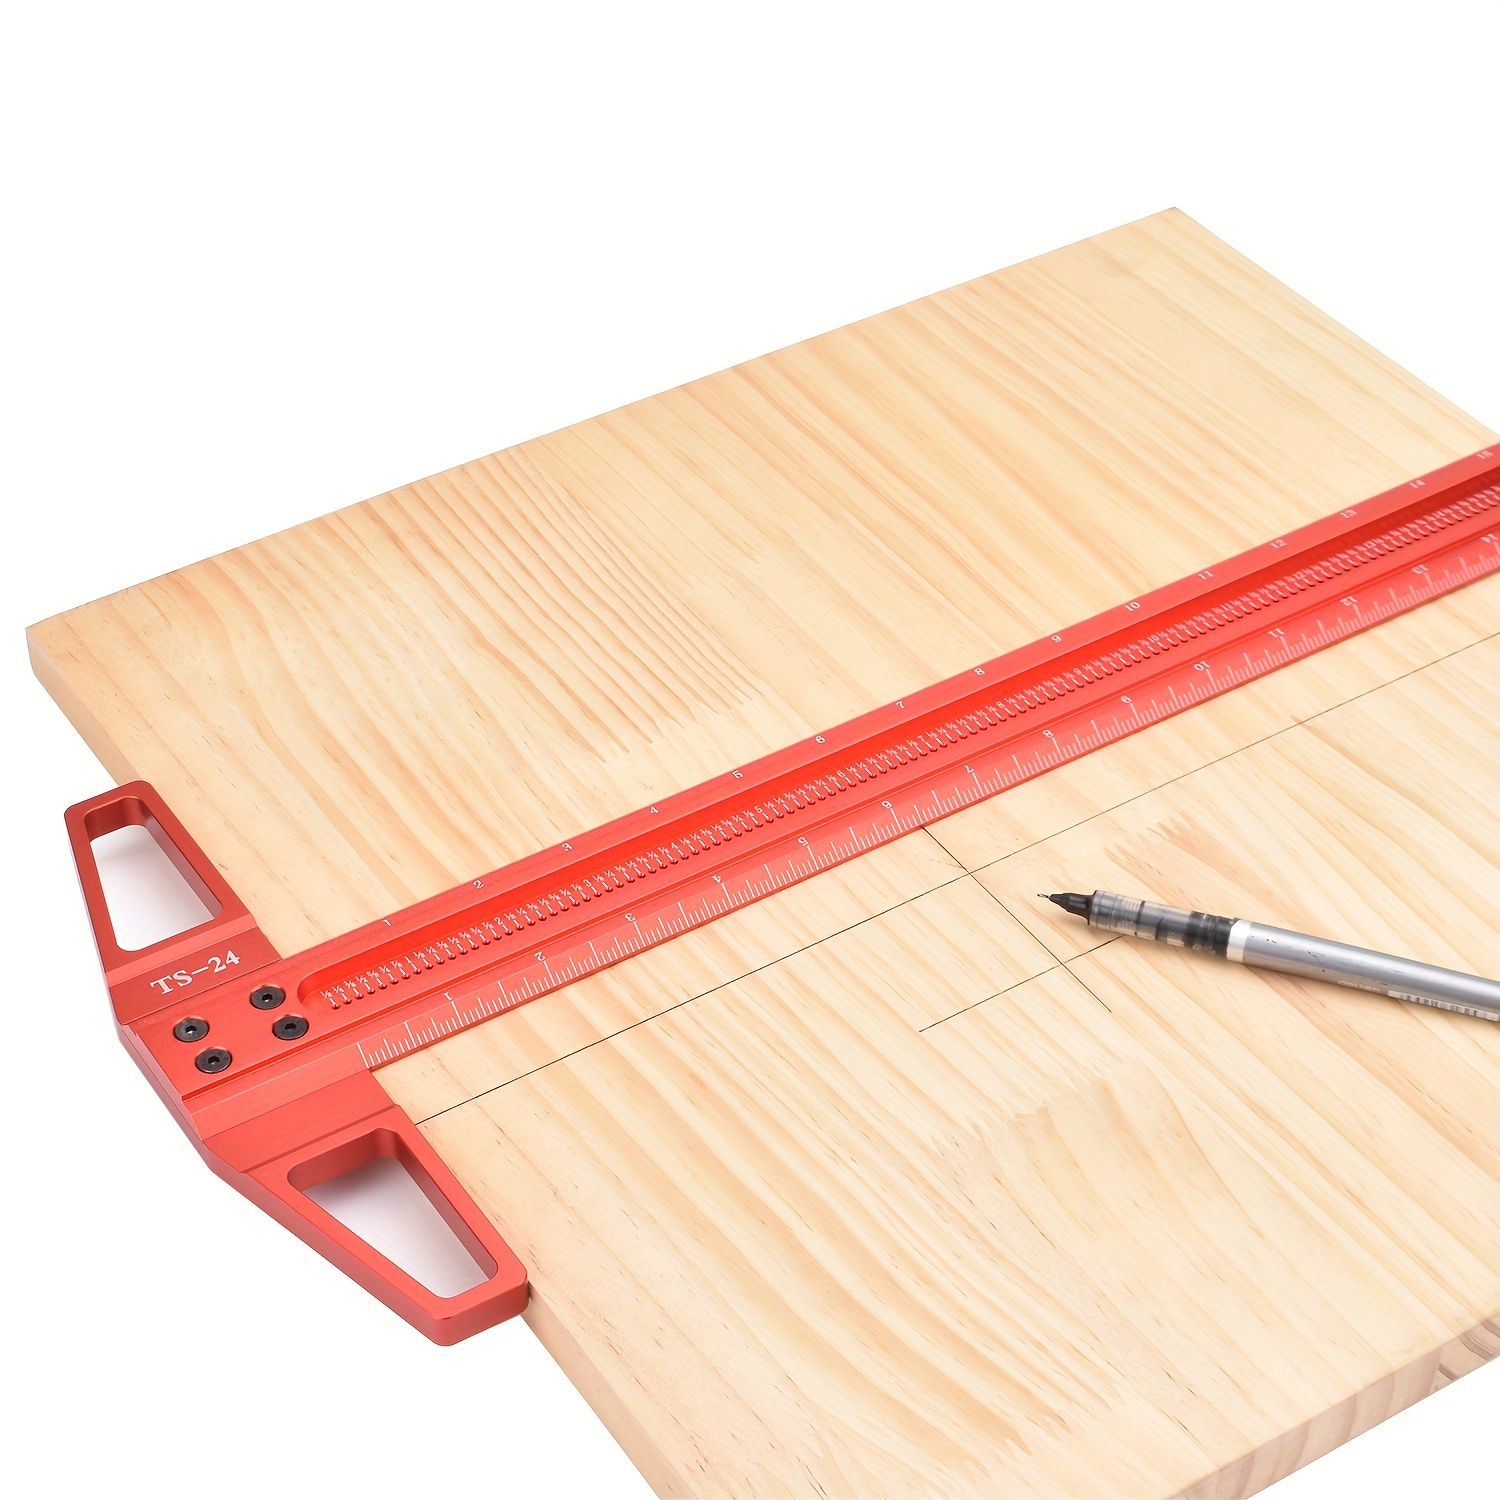 Aluminum T-Square Ruler 24 inch, Woodworking Scriber T-Square